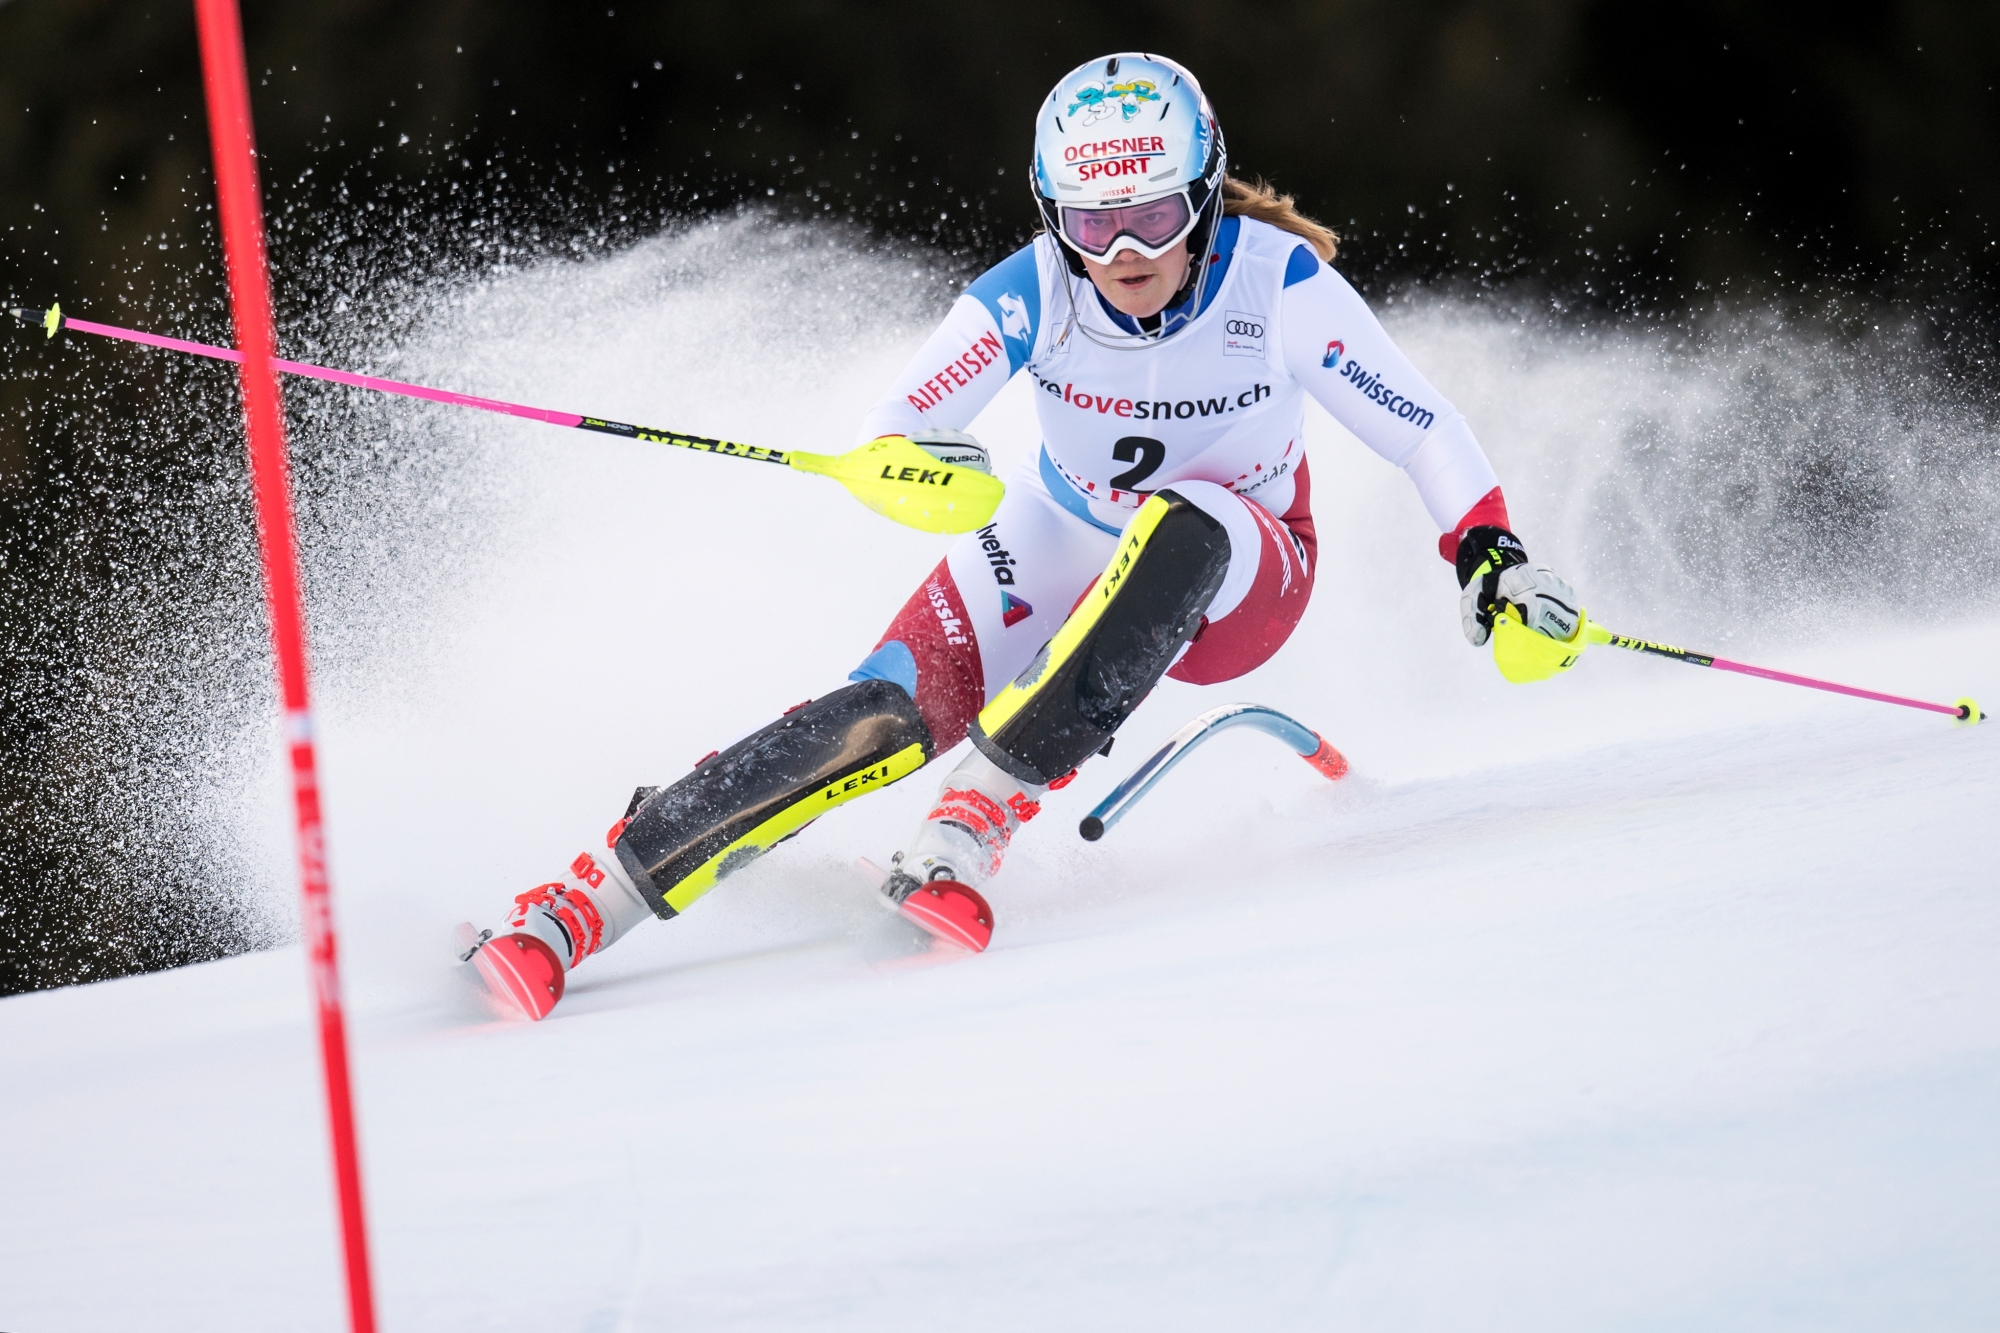 Melanie Meillard of Switzerland in action during the first run of the women's Slalom race at the Alpine Skiing FIS Ski World Cup in Lenzerheide, Switzerland, Sunday, January 28, 2018. (KEYSTONE/Jean-Christophe Bott) SWITZERLAND ALPINE SKIING WORLD CUP LENZERHEIDE